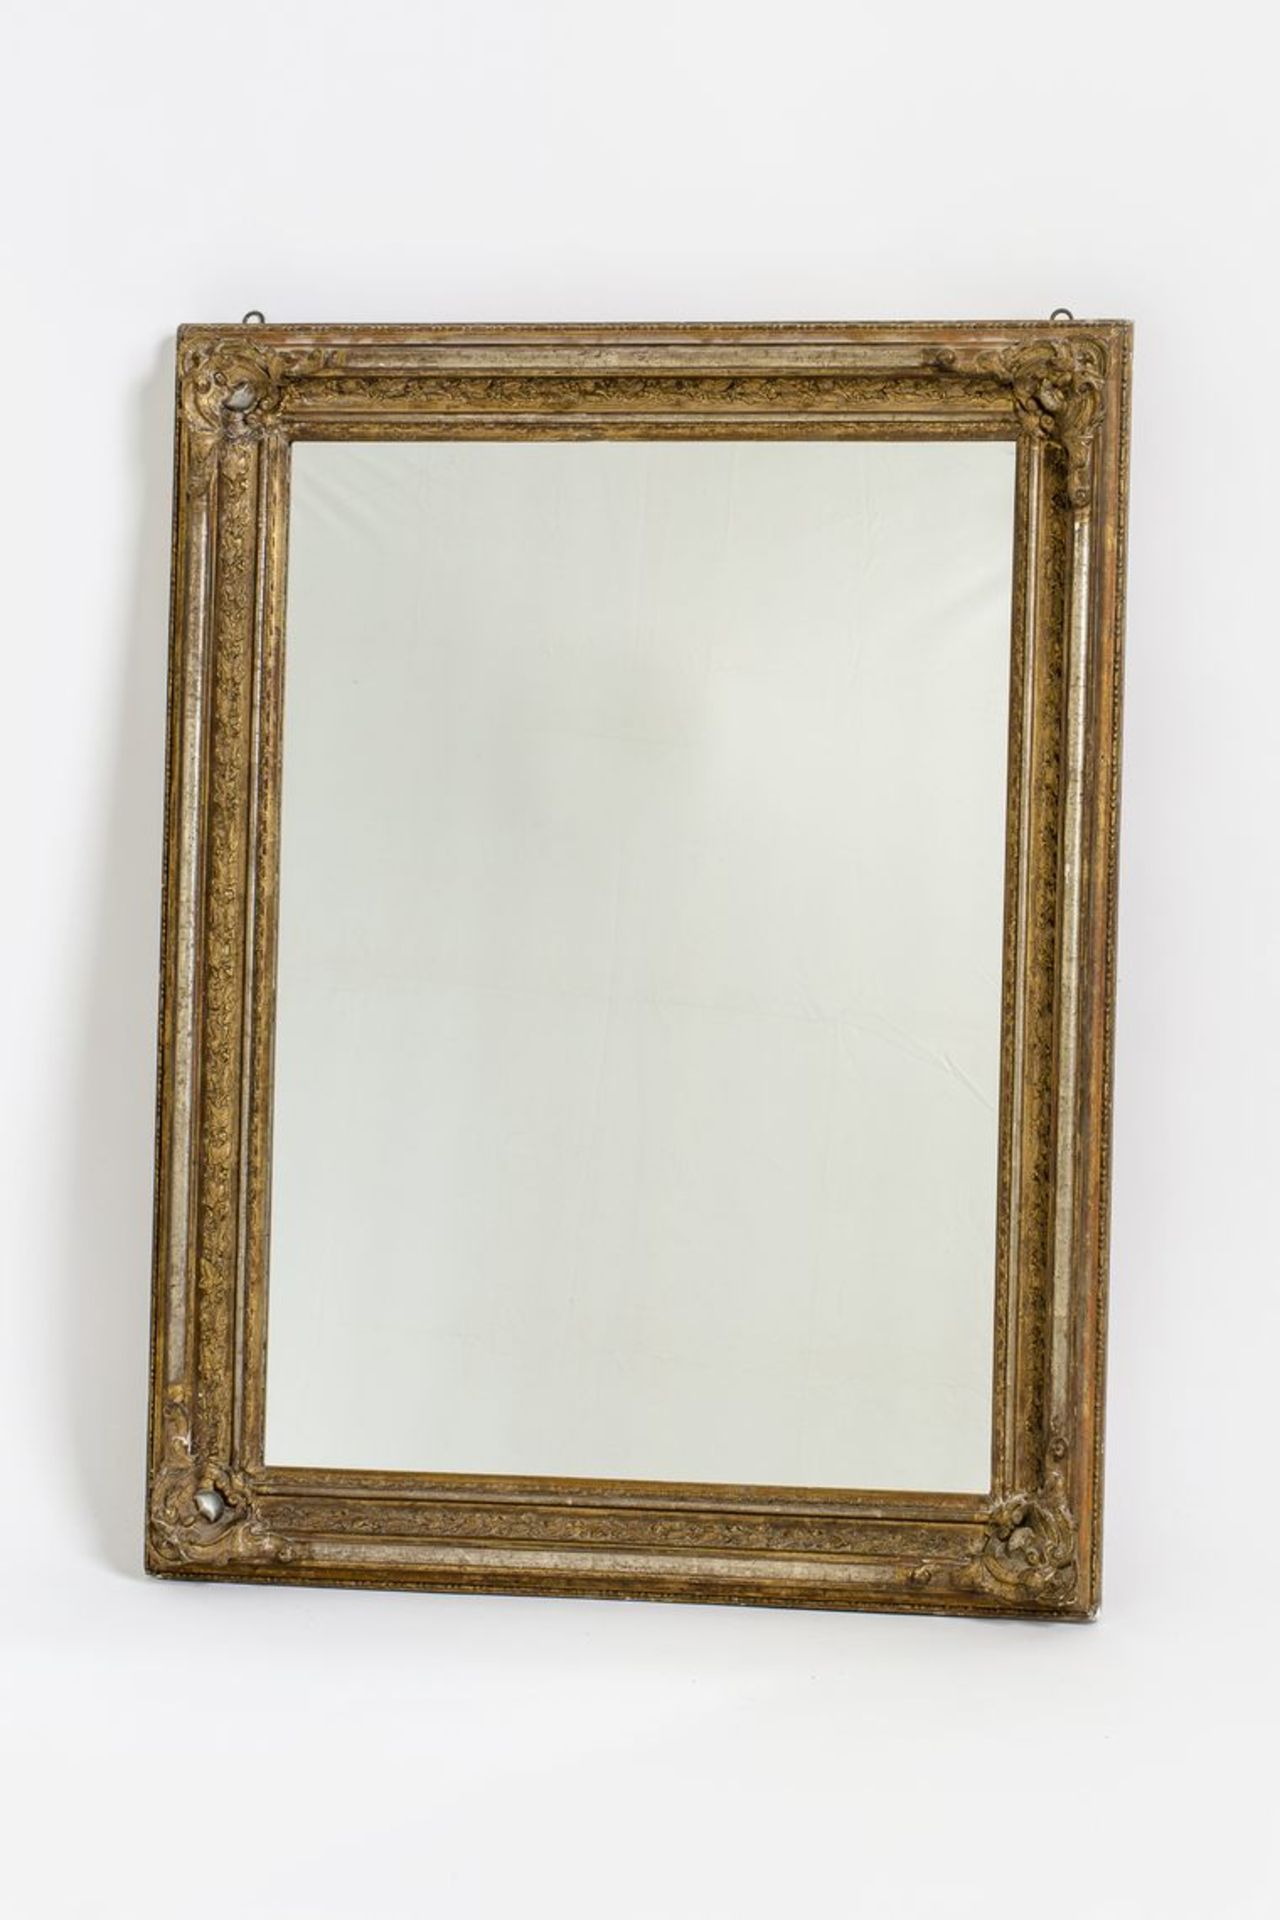 WandspiegelReliefierter Rahmen, ölvergoldet (kl. Fehlstellen). 19. Jh. H. 105 cm, B. 85 cm.